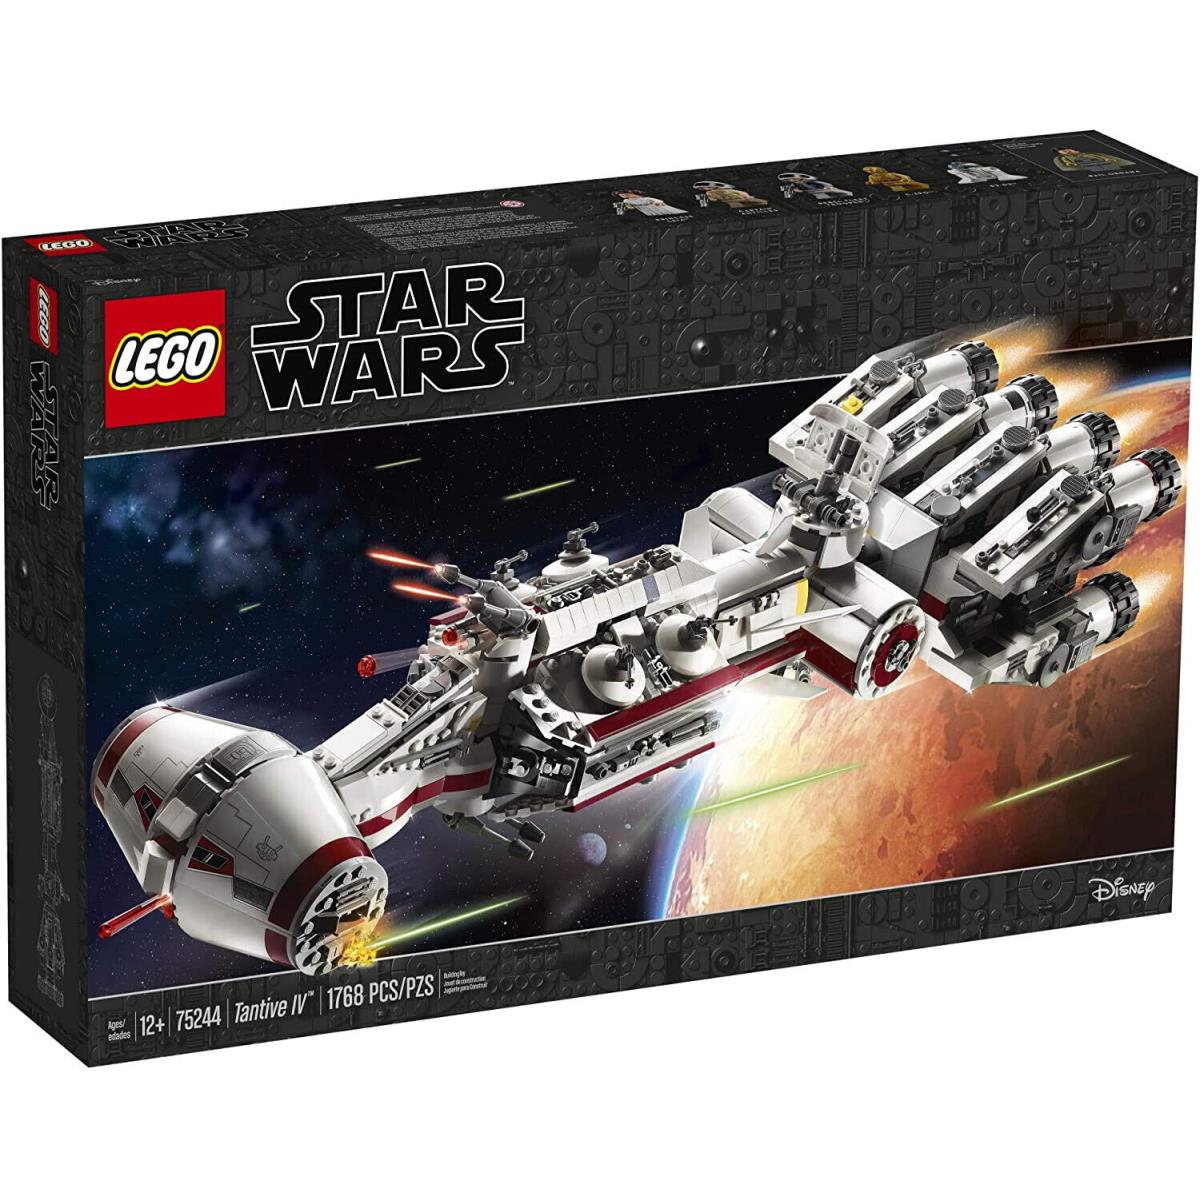 Lego Star Wars 75244 Tantive IV - --- See Description